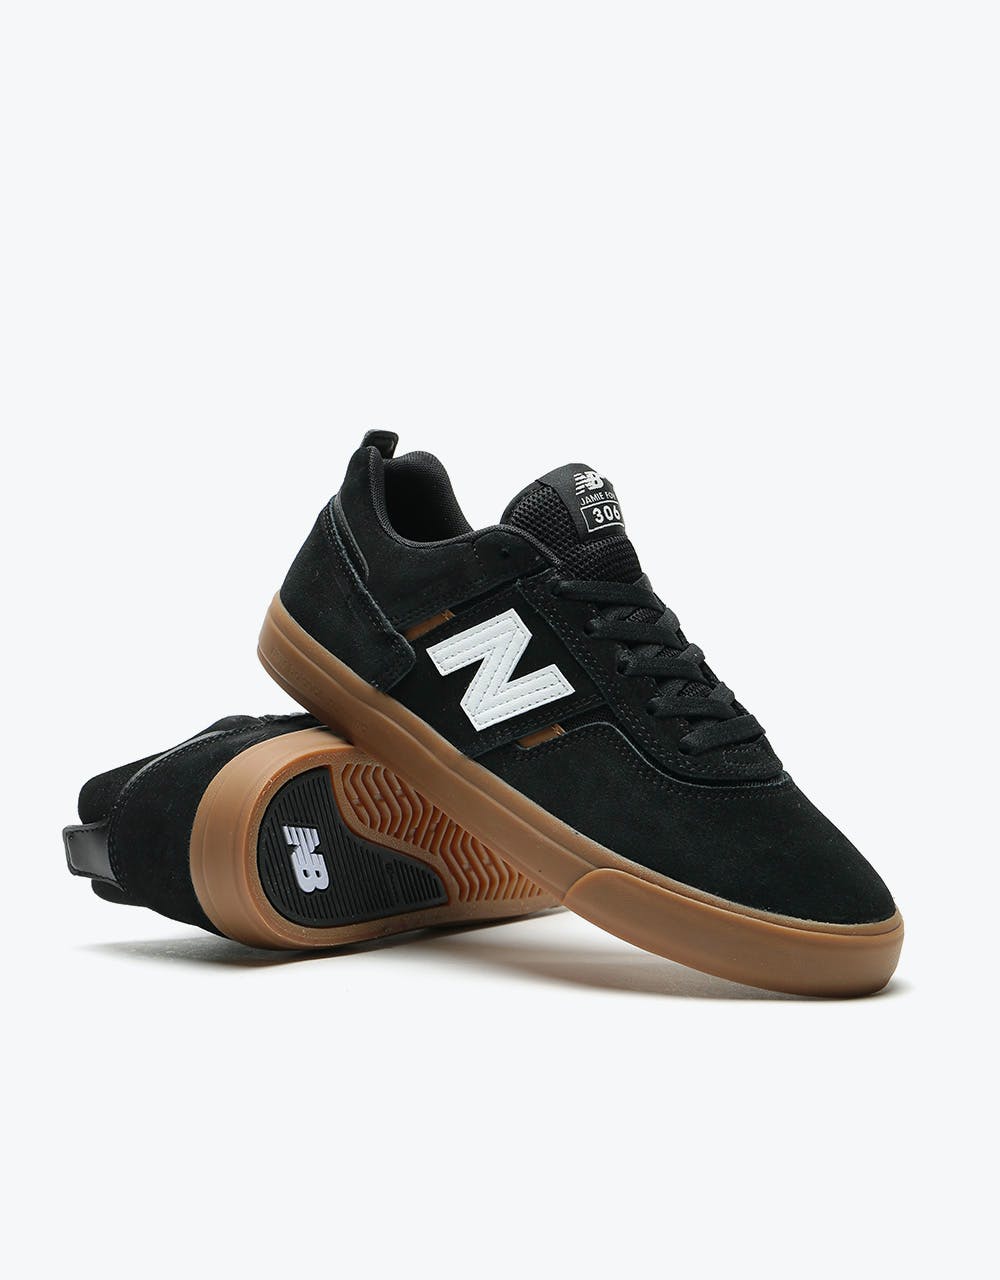 New Balance Numeric Foy 306 Skate Shoes - Black/Gum